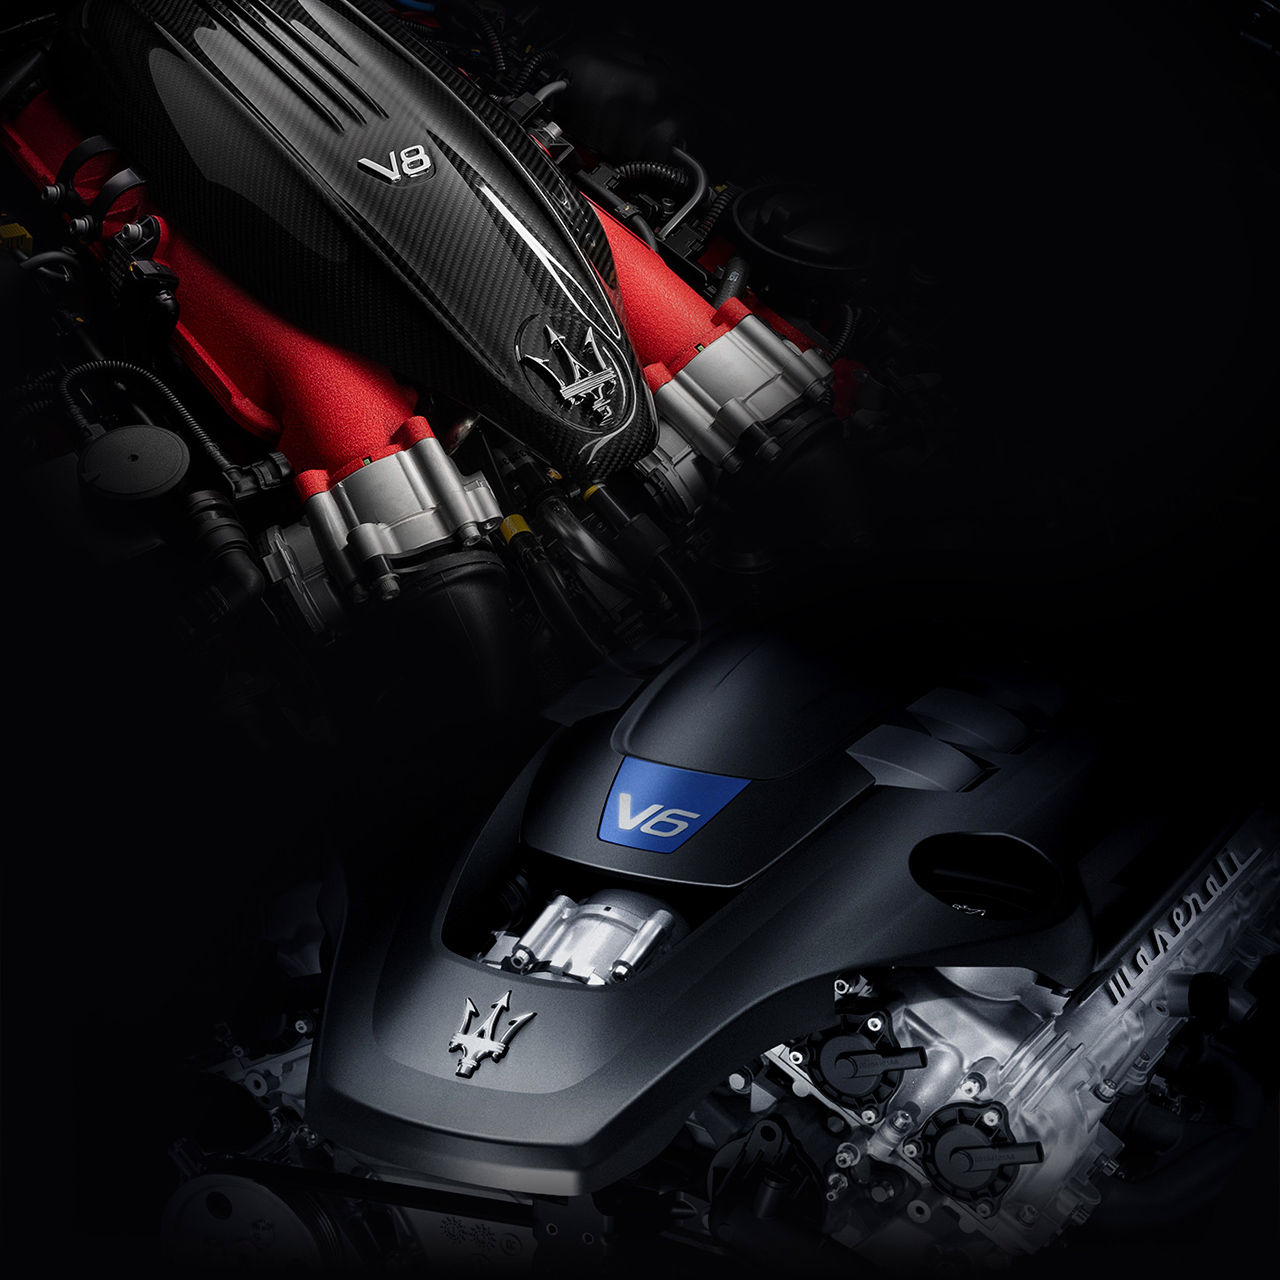 Motores V6 y V8